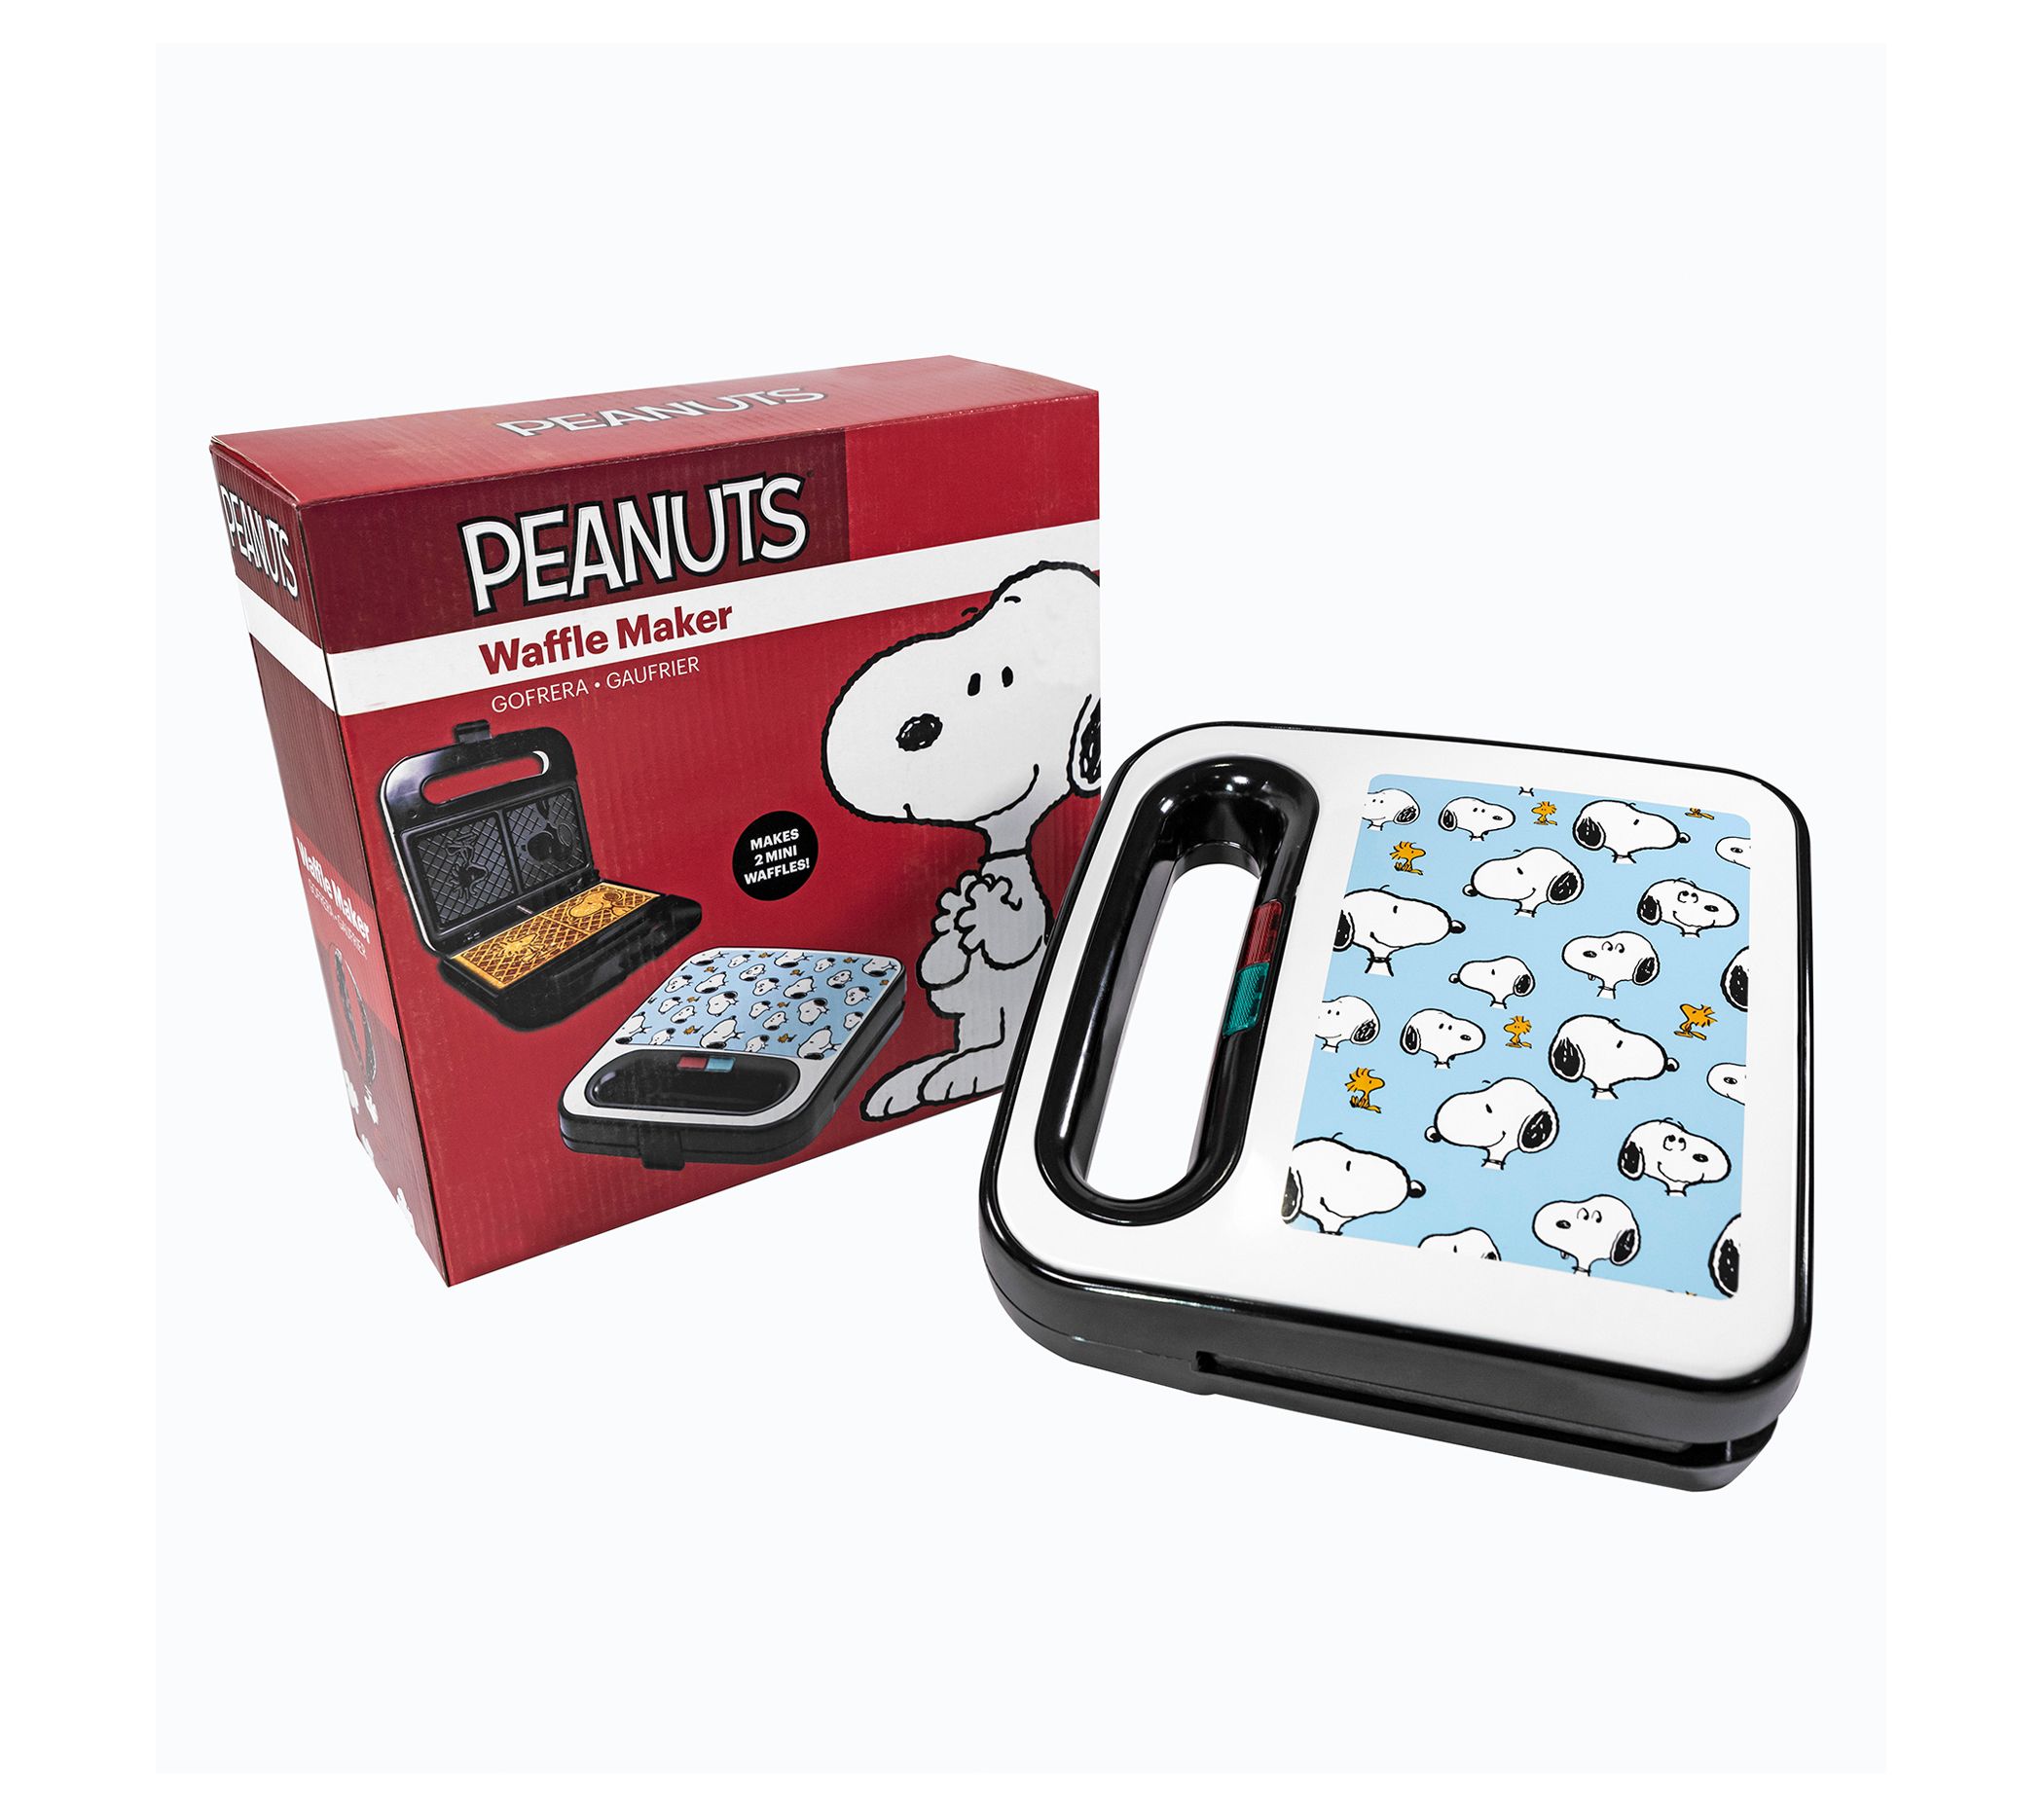 Uncanny Brands Peanuts 2 Quart Slow Cooker- Snoopy & Woodstock Appliance 